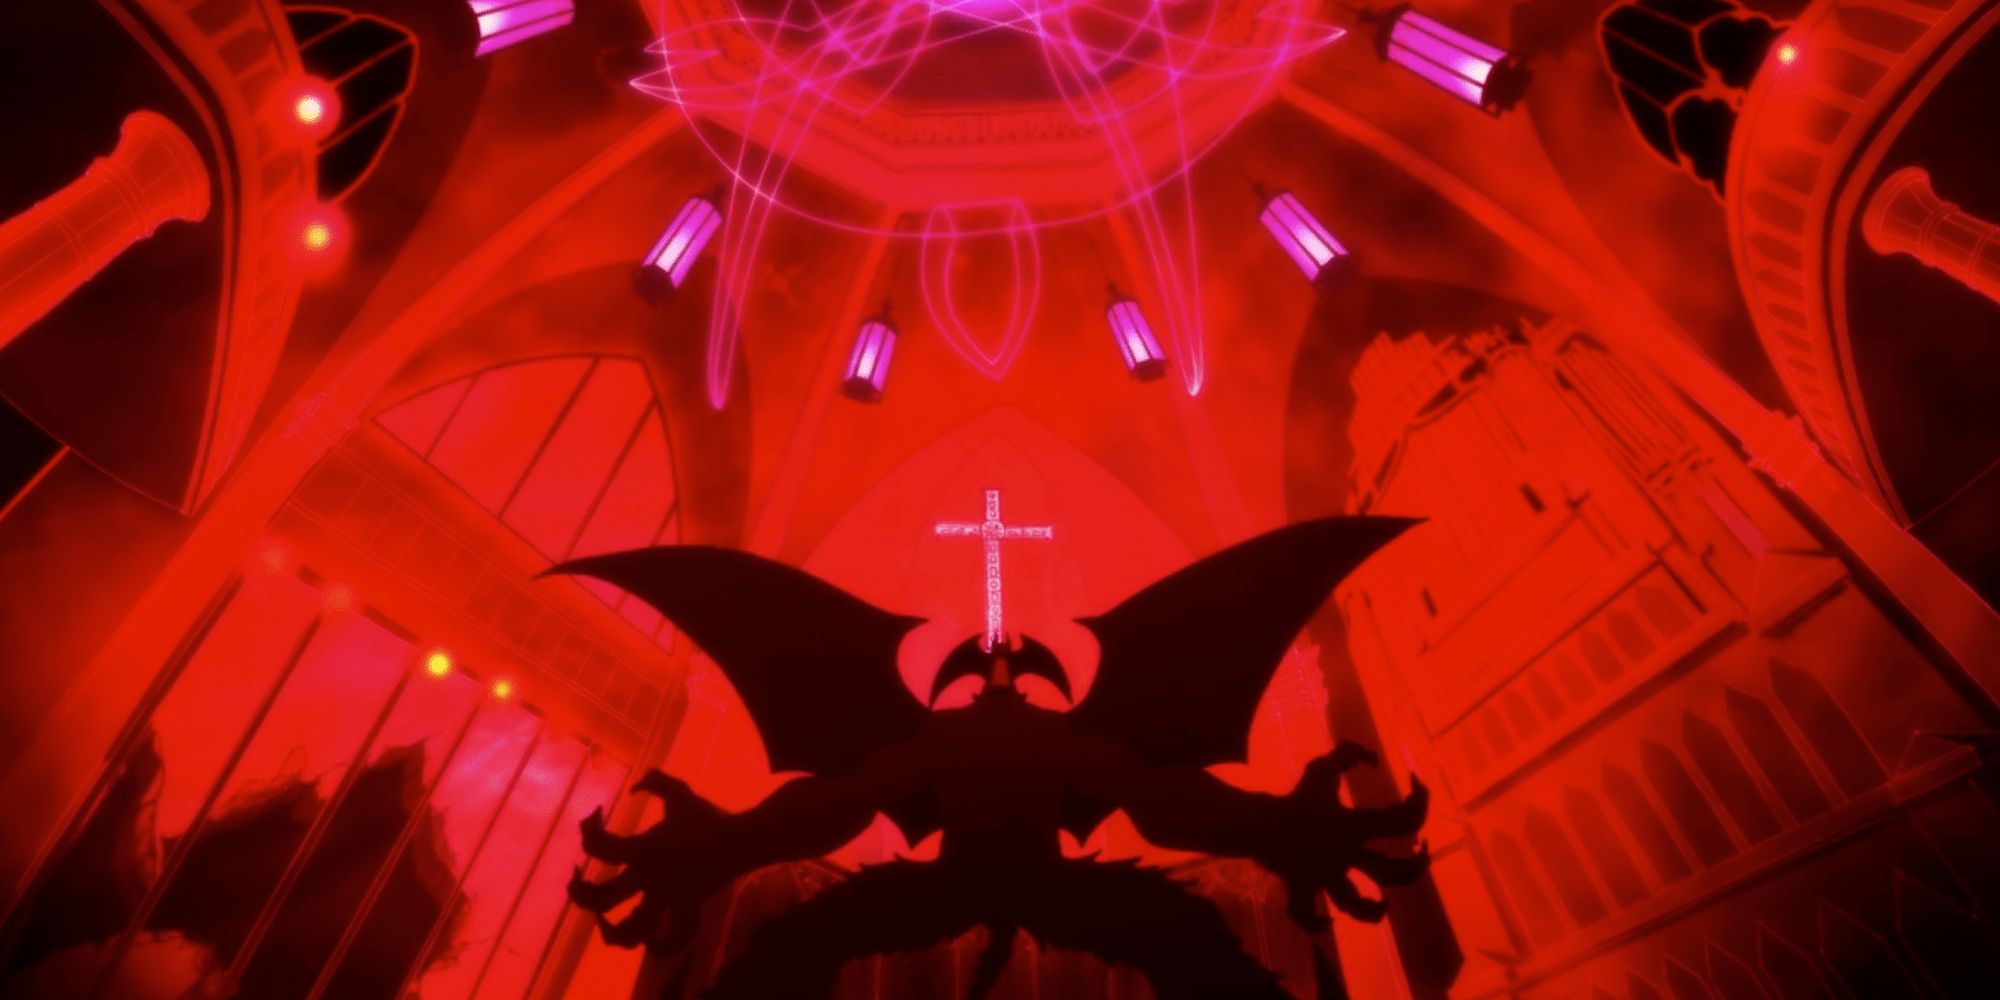 devilman crybaby netflix horror anime